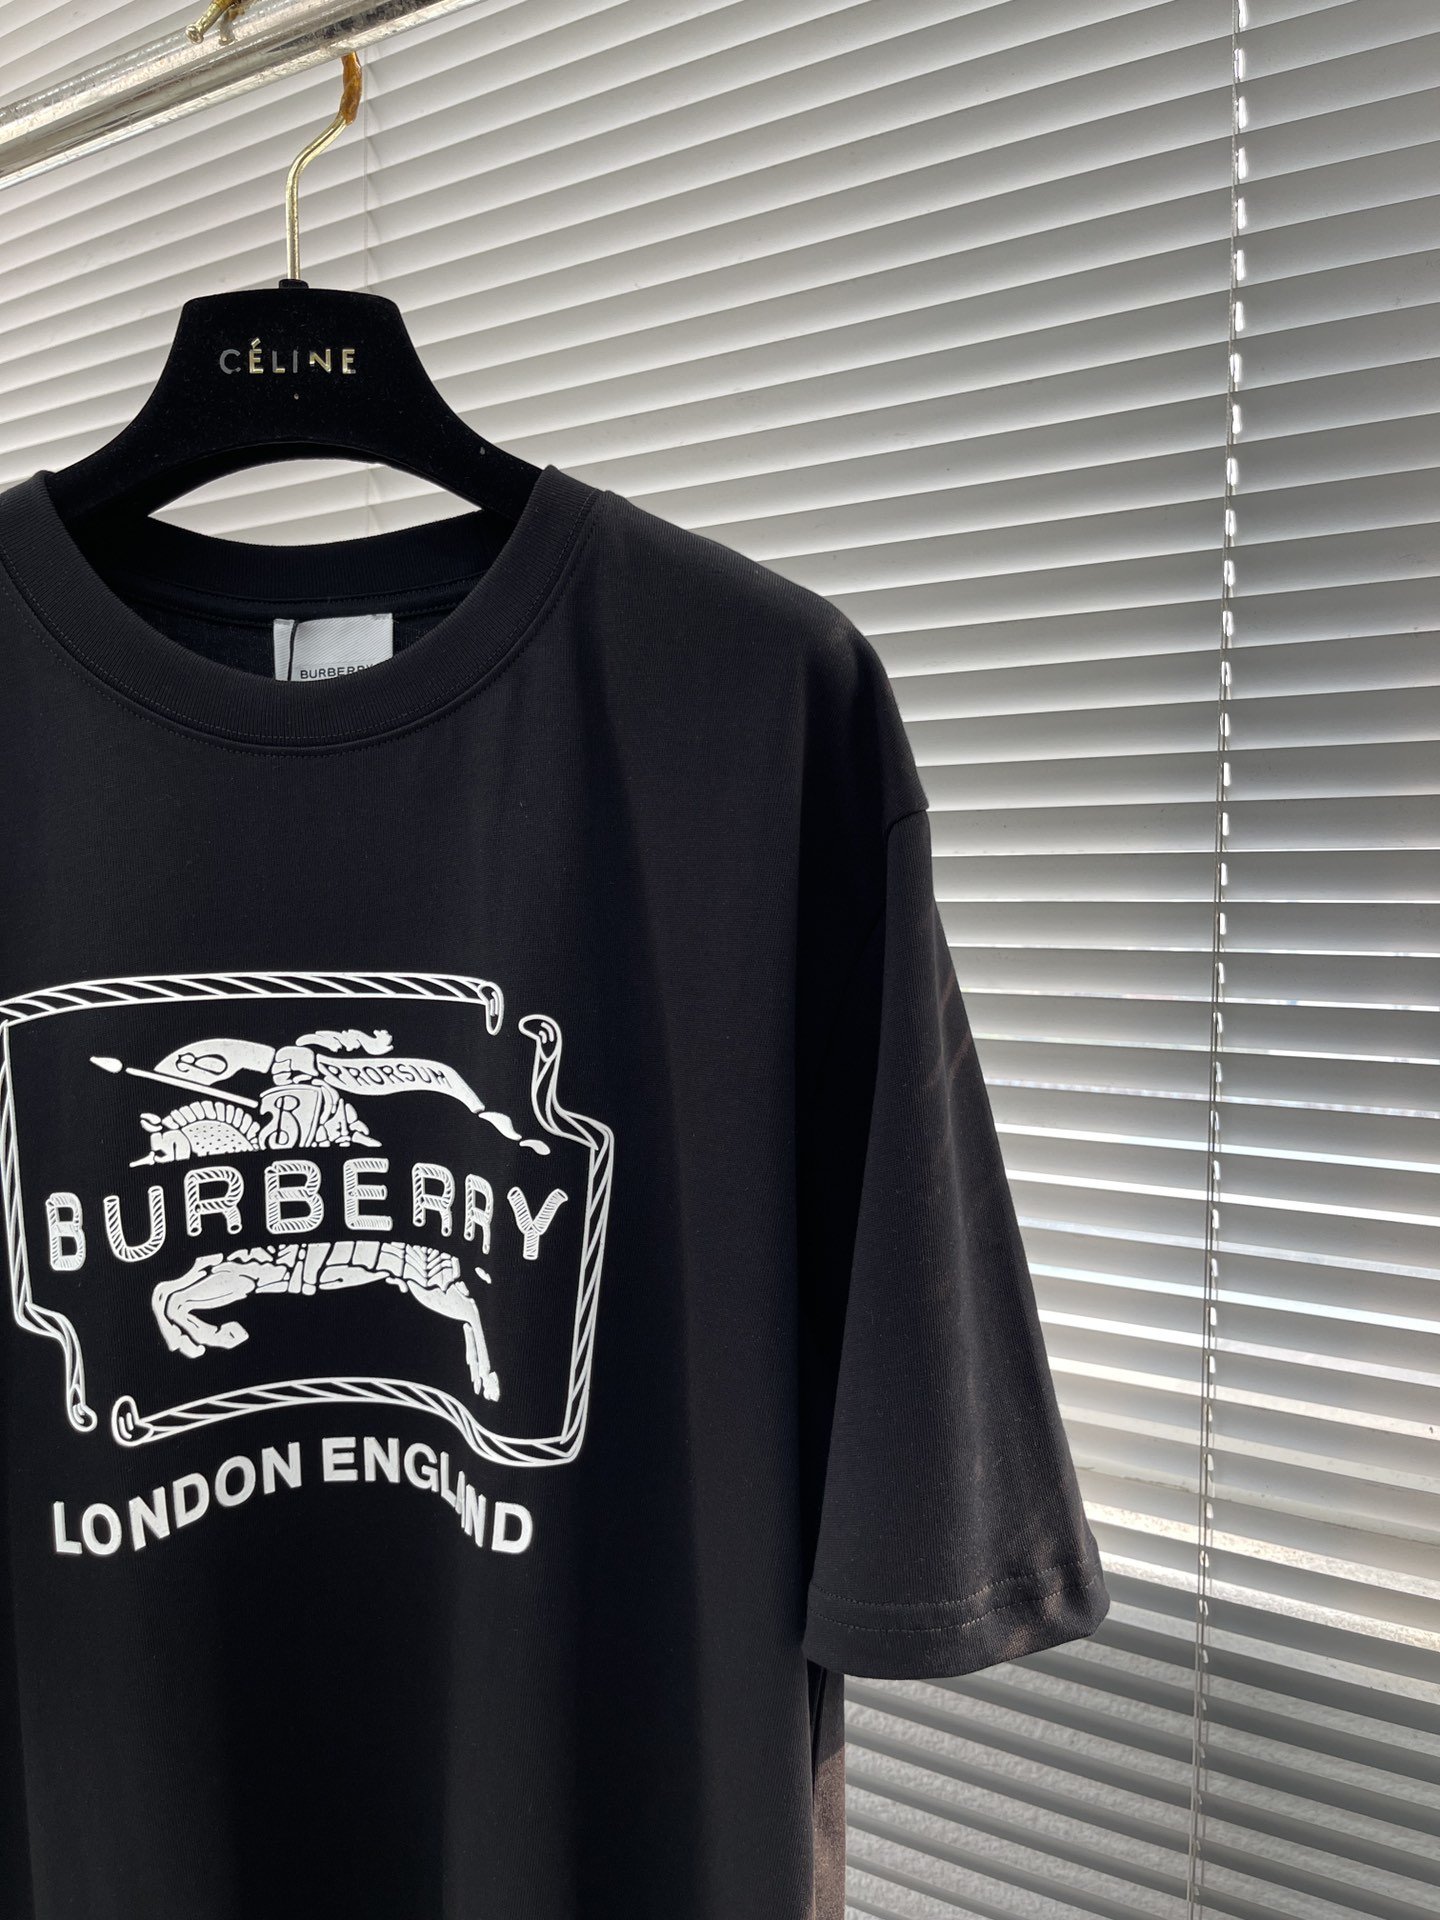 -BBR23夏装微章短袖印花系列Bur于2018年推出了新的字母组合和标志由PeterSaville设计